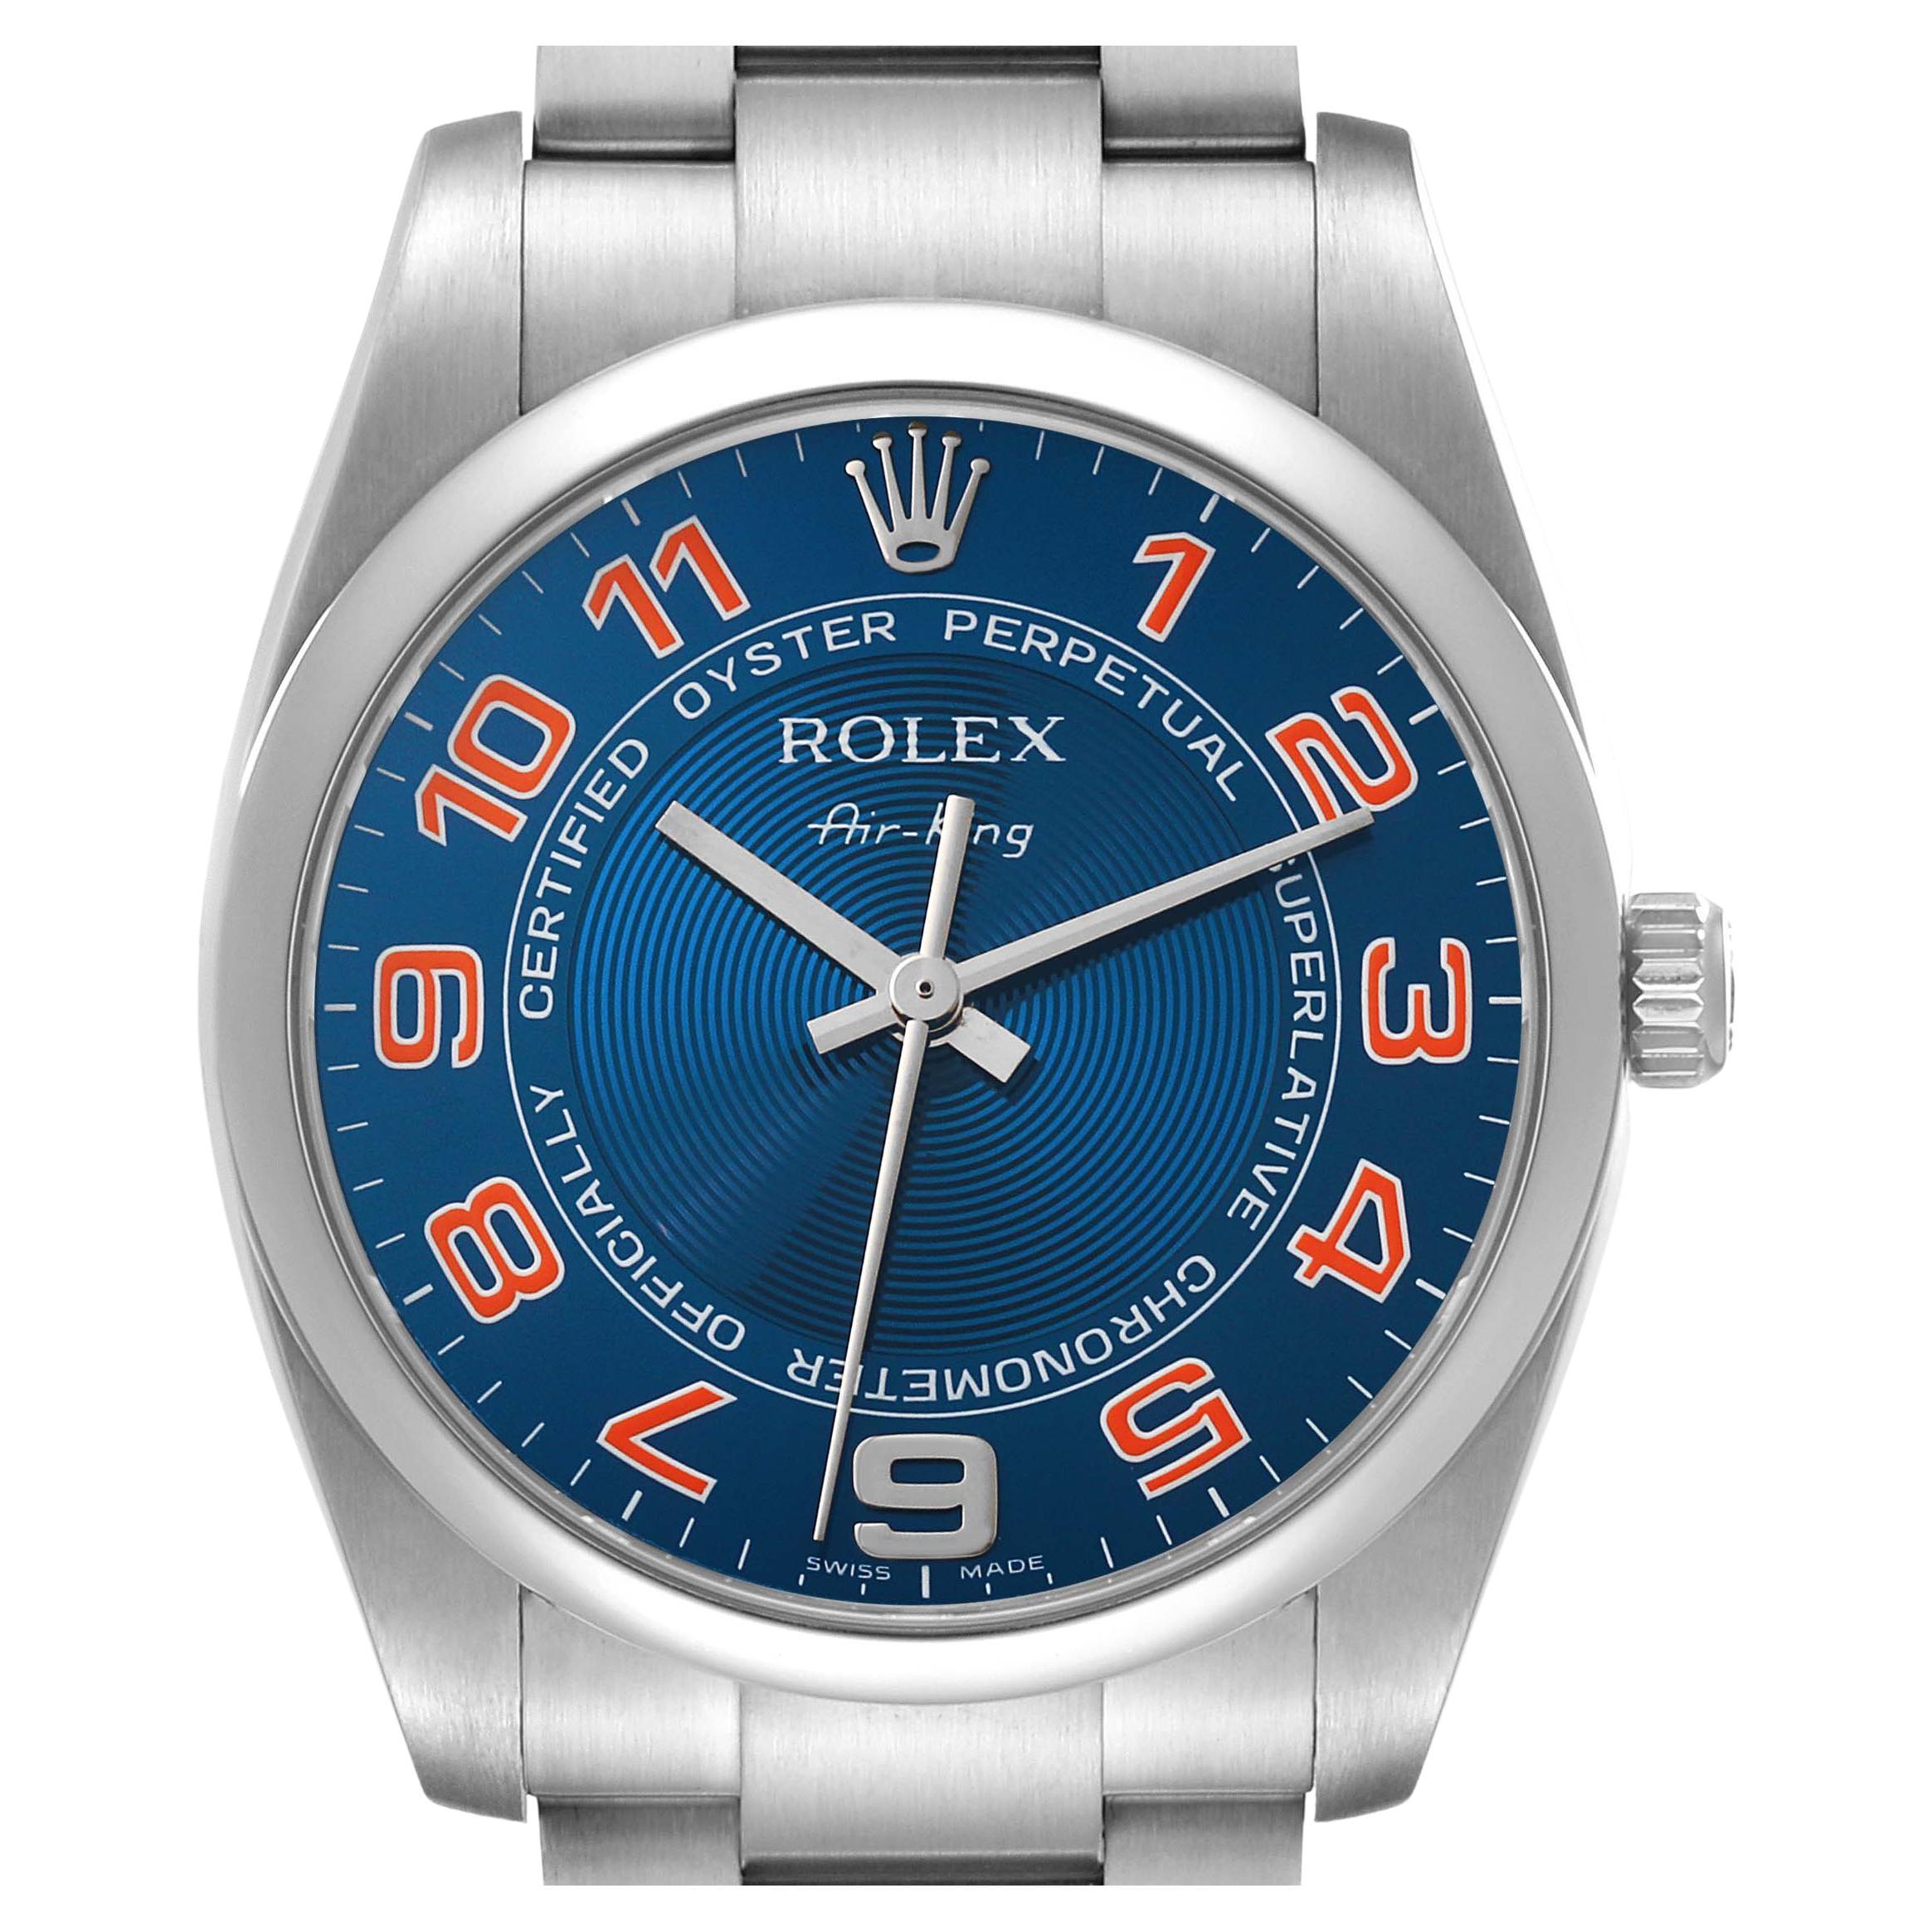 Rolex Air King Blue Concentric Dial Steel Mens Watch 114200 Box Card